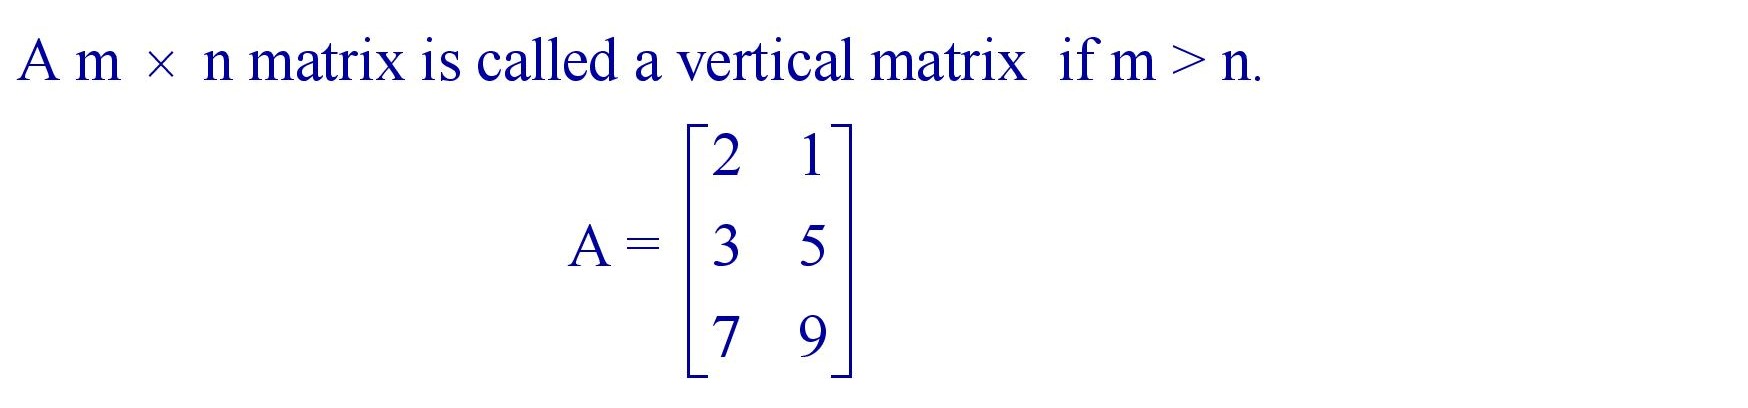 Vertical Matrix